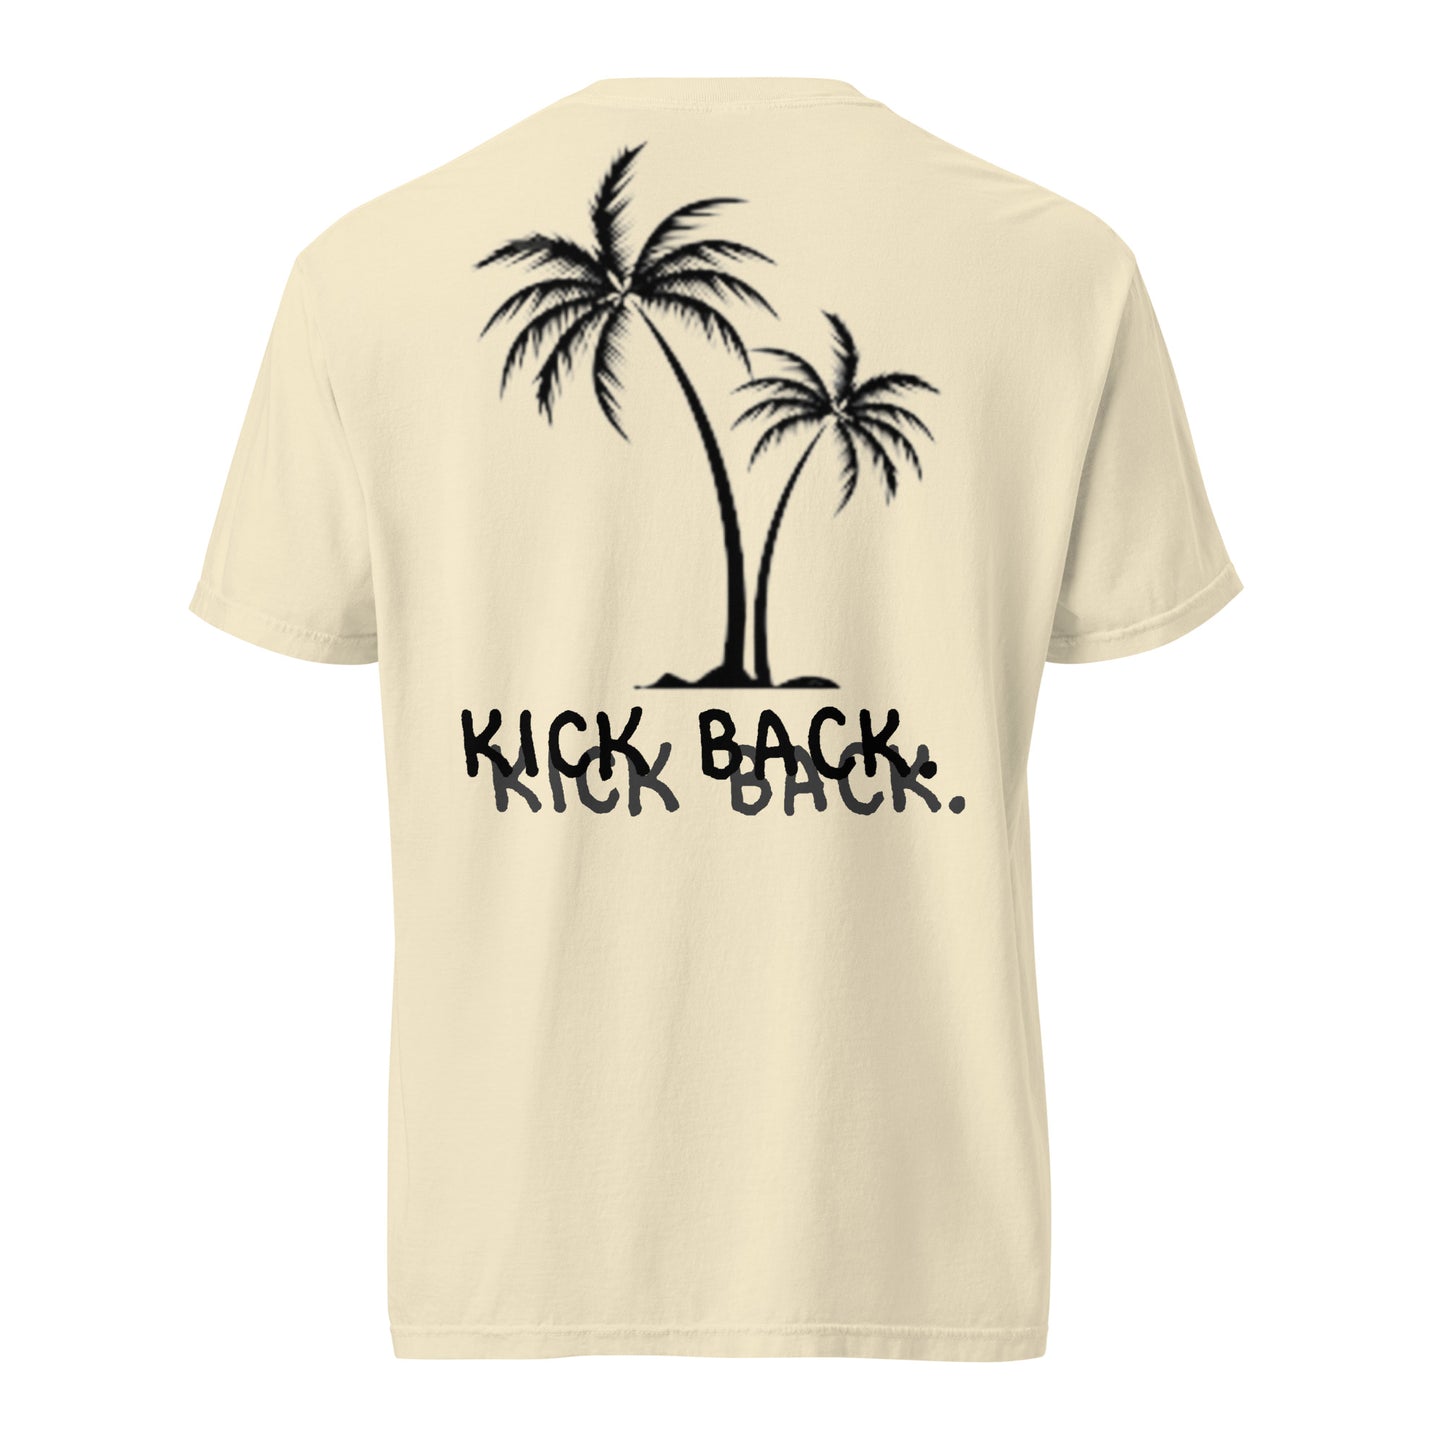 Kick Back Men's Embroidered Tee-Shirt